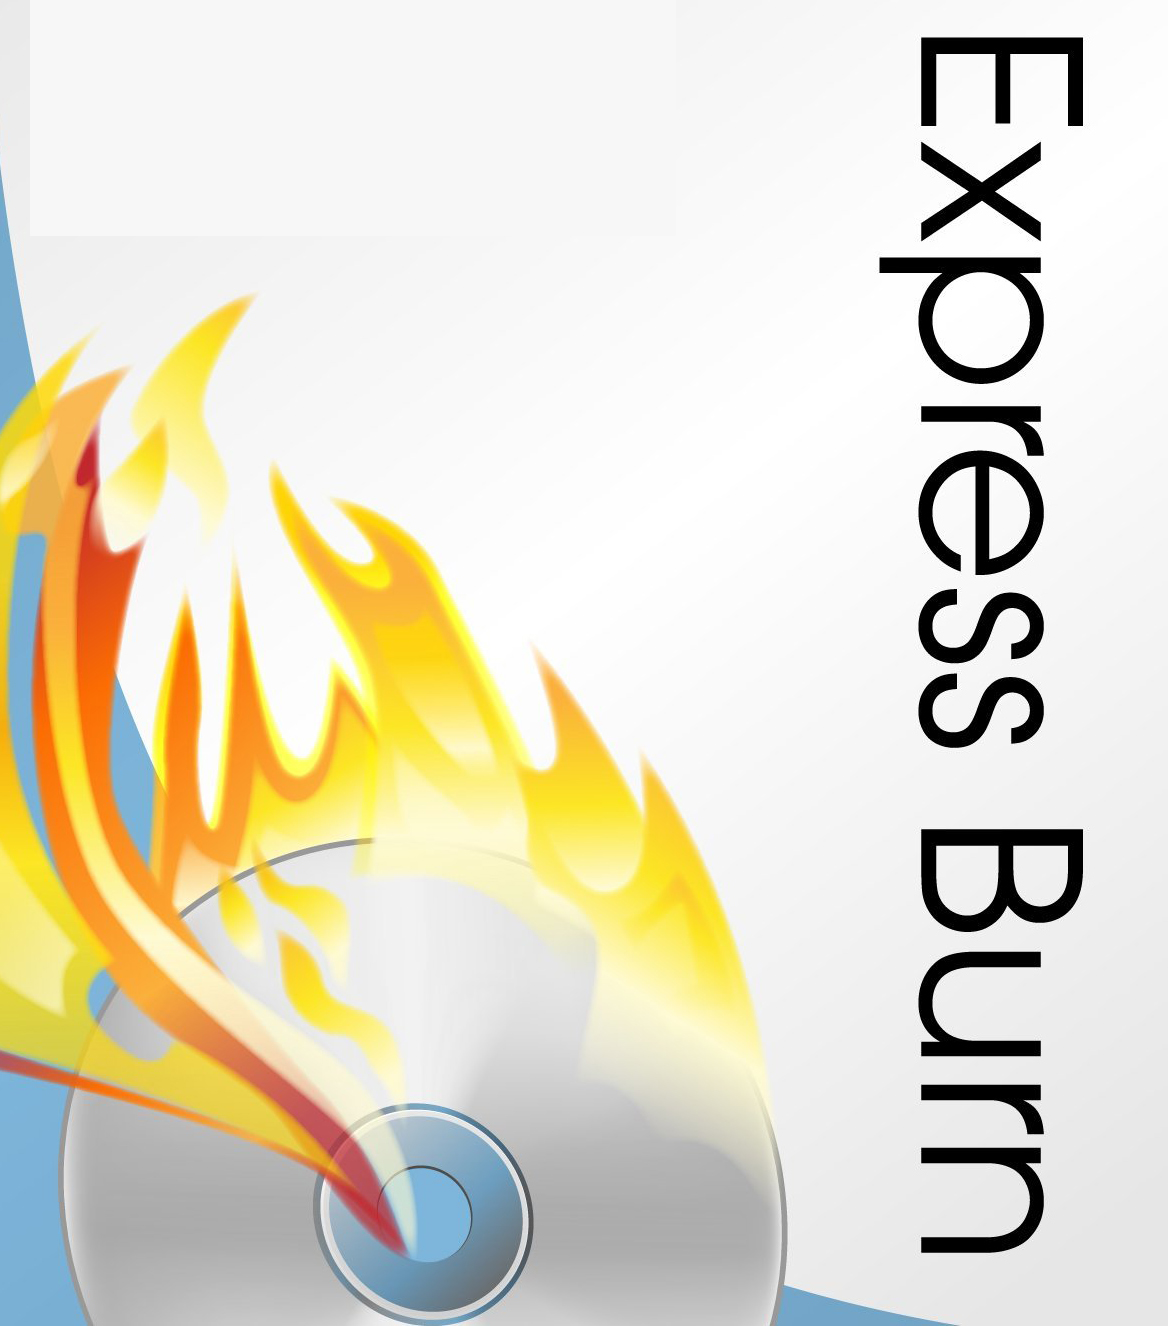 express burn reviews